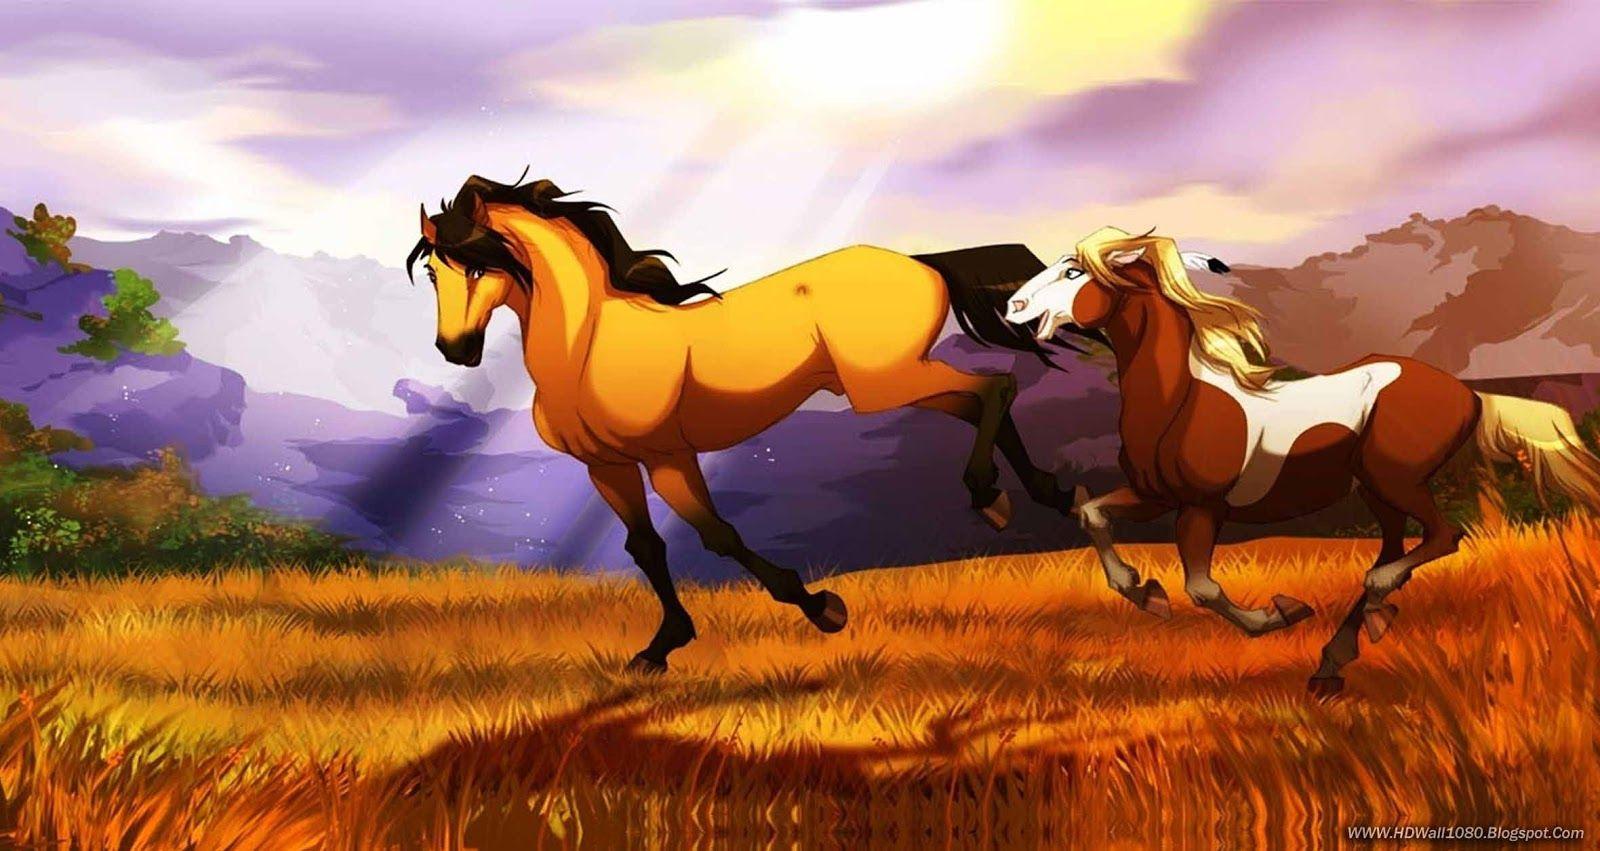 Spirit Horse Movie 2. Spirit Disney Movie. Spirit, rain